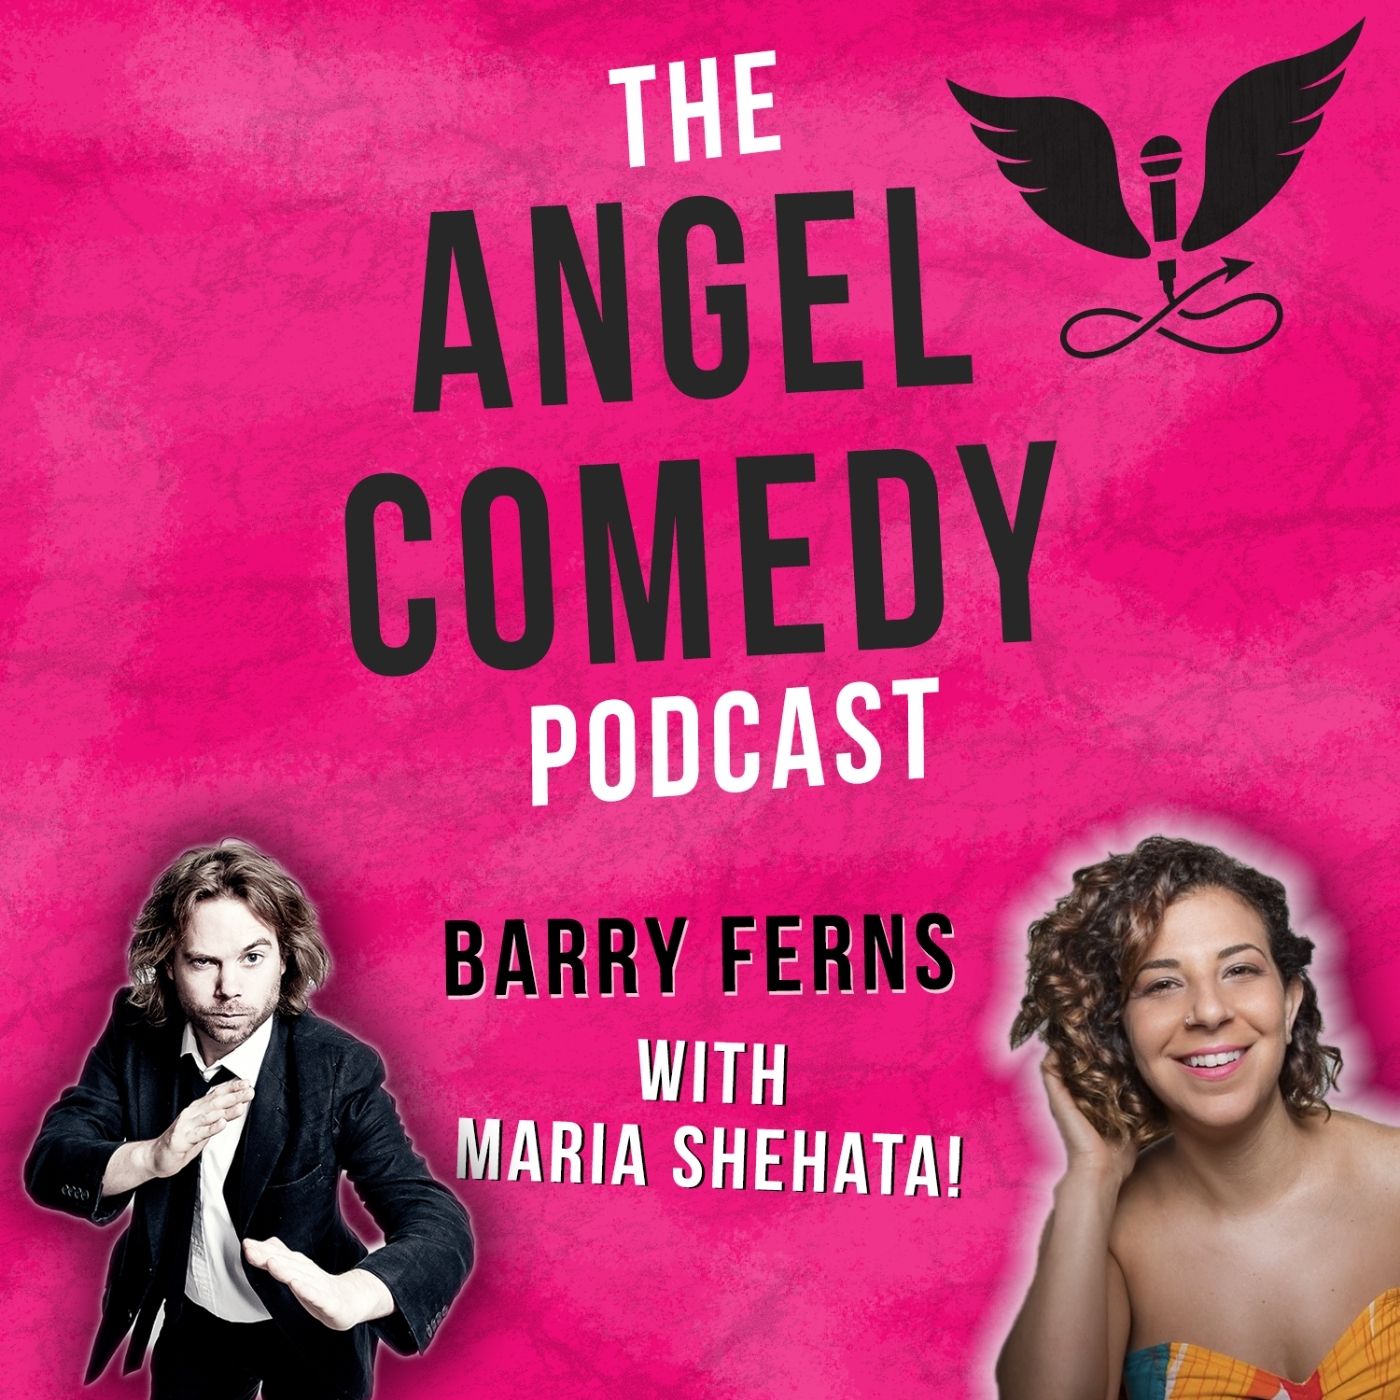 The Angel Comedy Podcast with Maria Shehata!